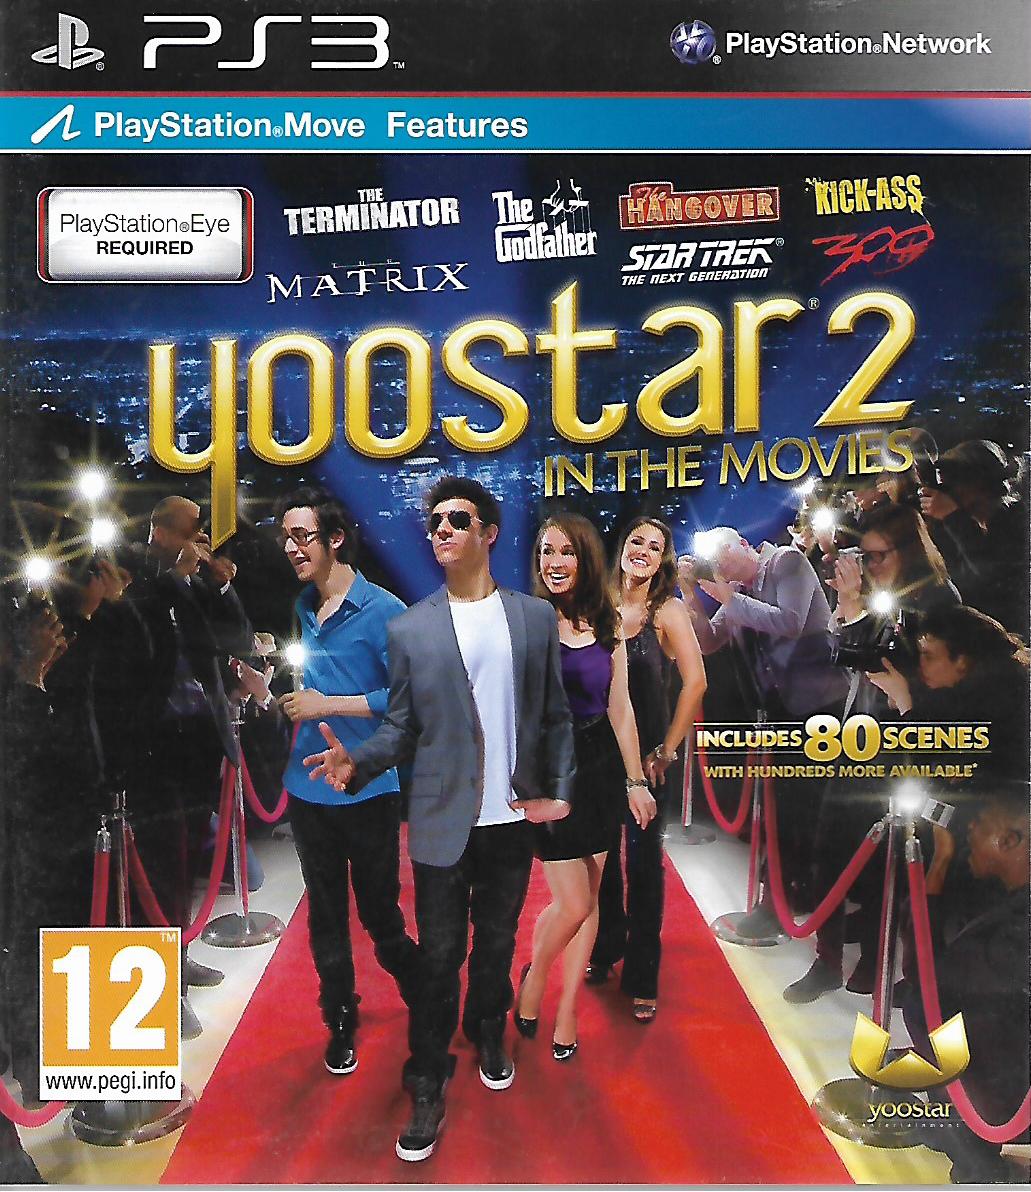 YOOSTAR 2 - IN THE MOVIES (PS3 - bazar)